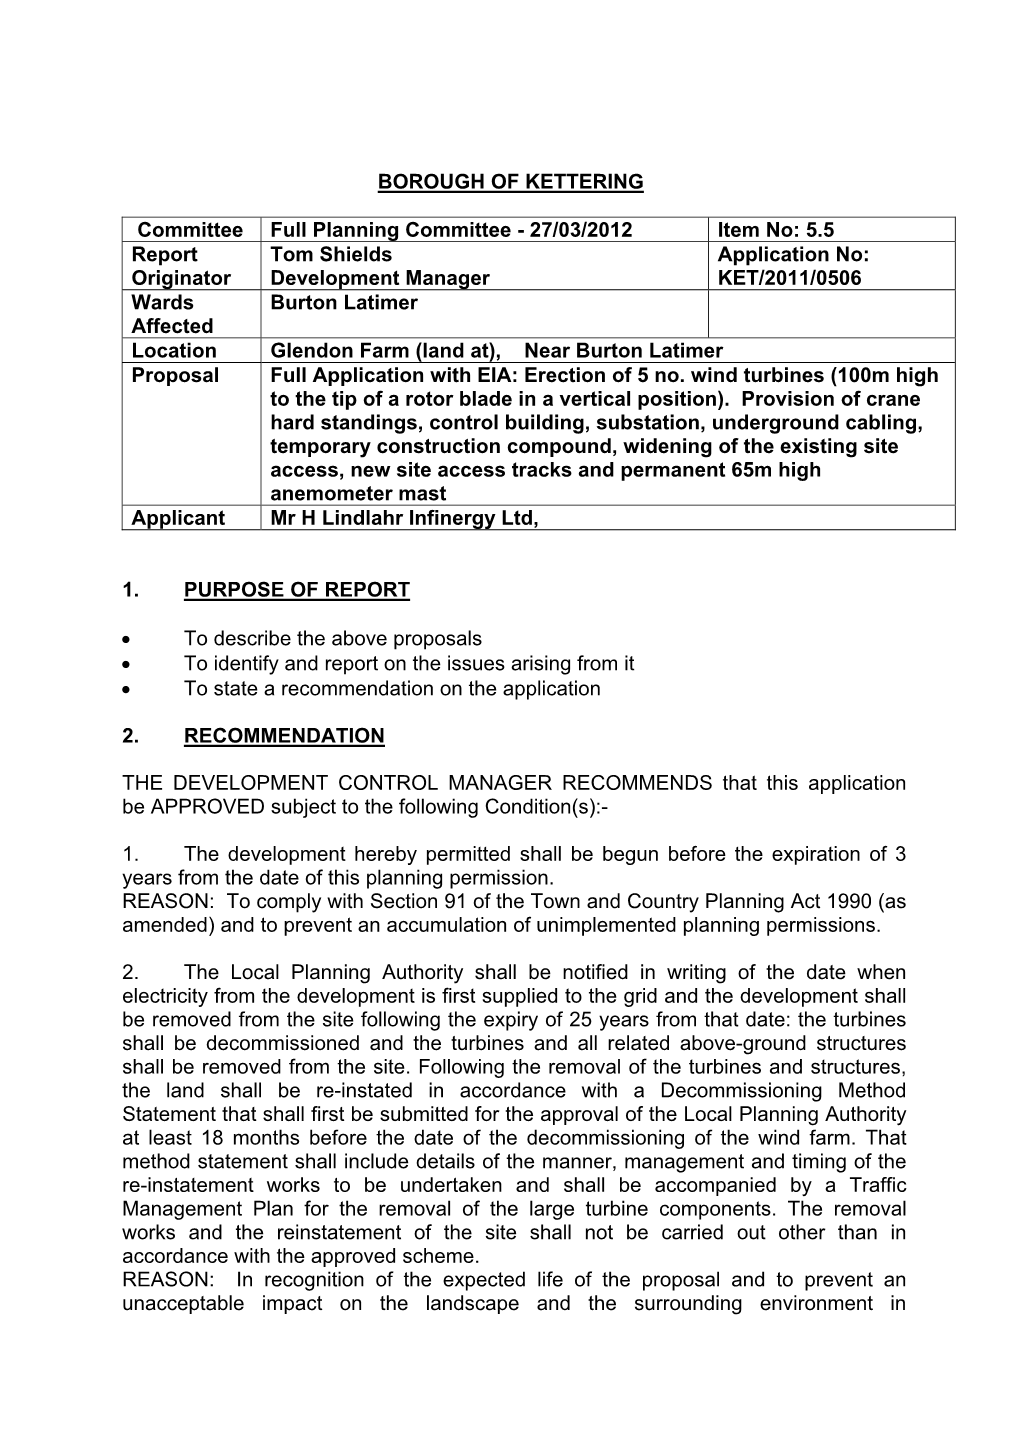 Near Burton Latimer Proposal Full Application with EIA: Erection of 5 No